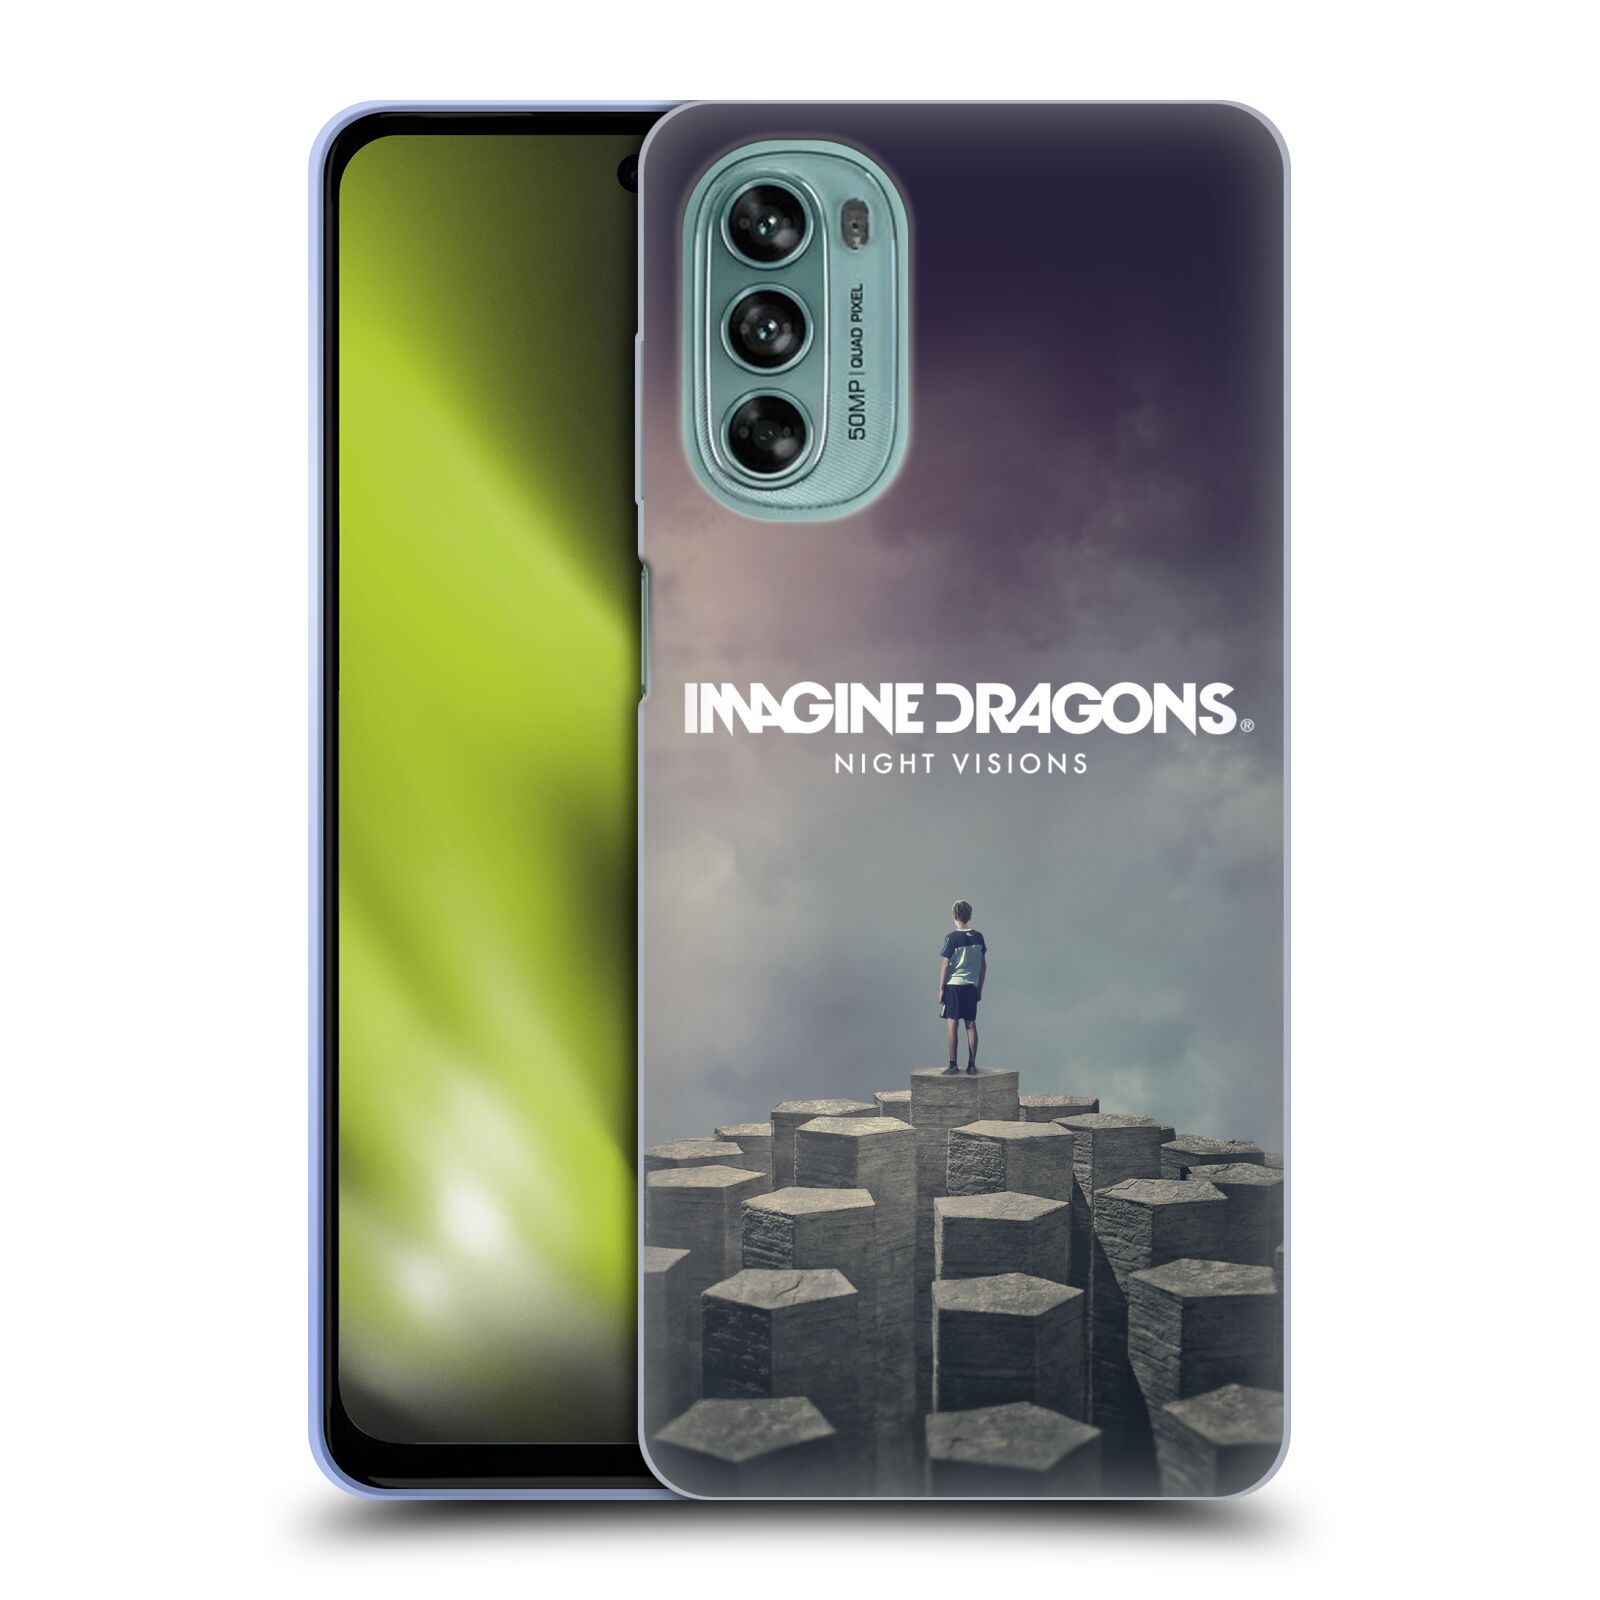 Silikonové pouzdro na mobil Motorola Moto G62 5G - Imagine Dragons - Night Visions